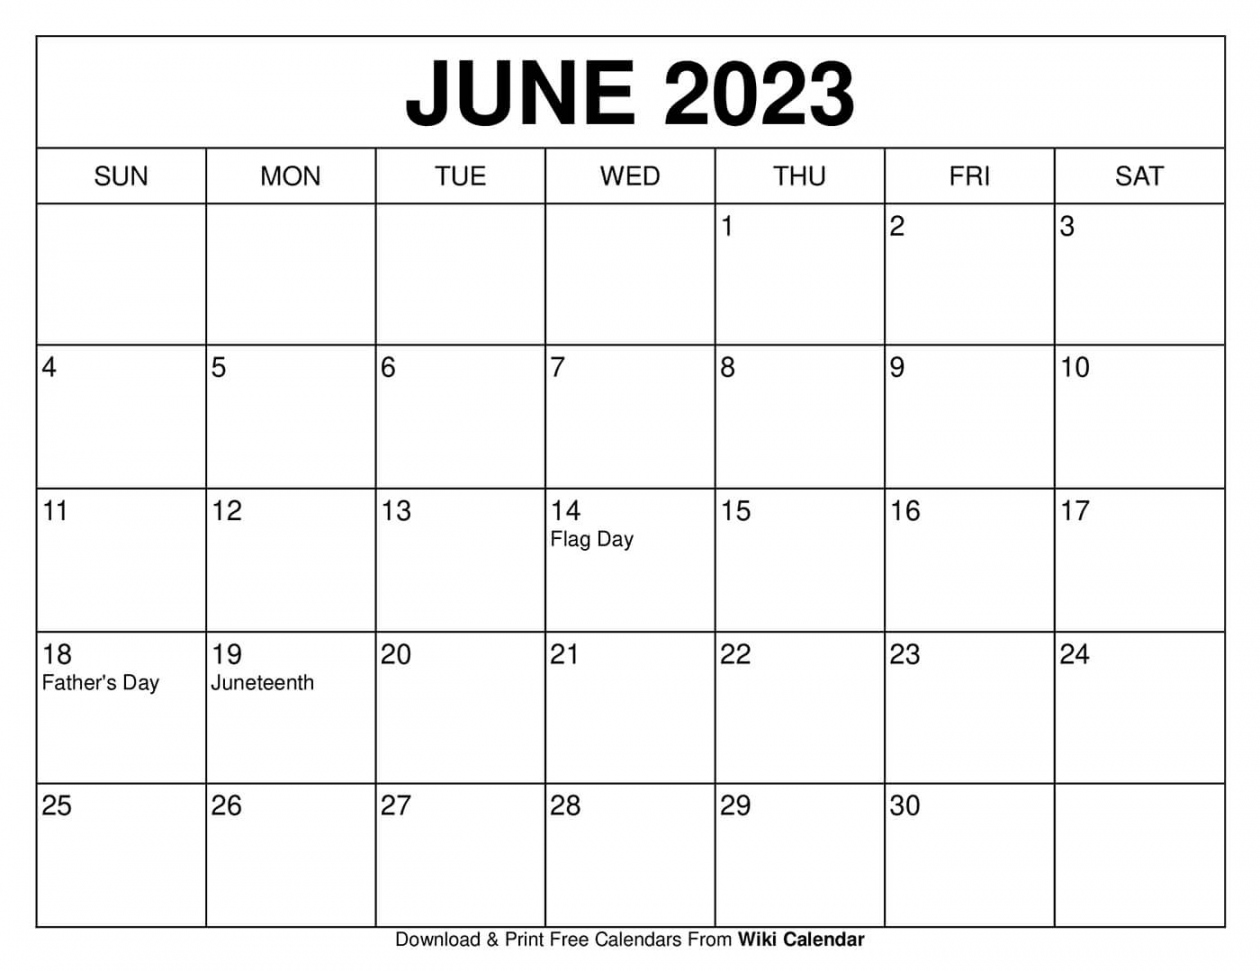 Free Printable June  Calendar Templates With Holidays - Wiki Calendar - FREE Printables - Free Printable June 2023 Calendar